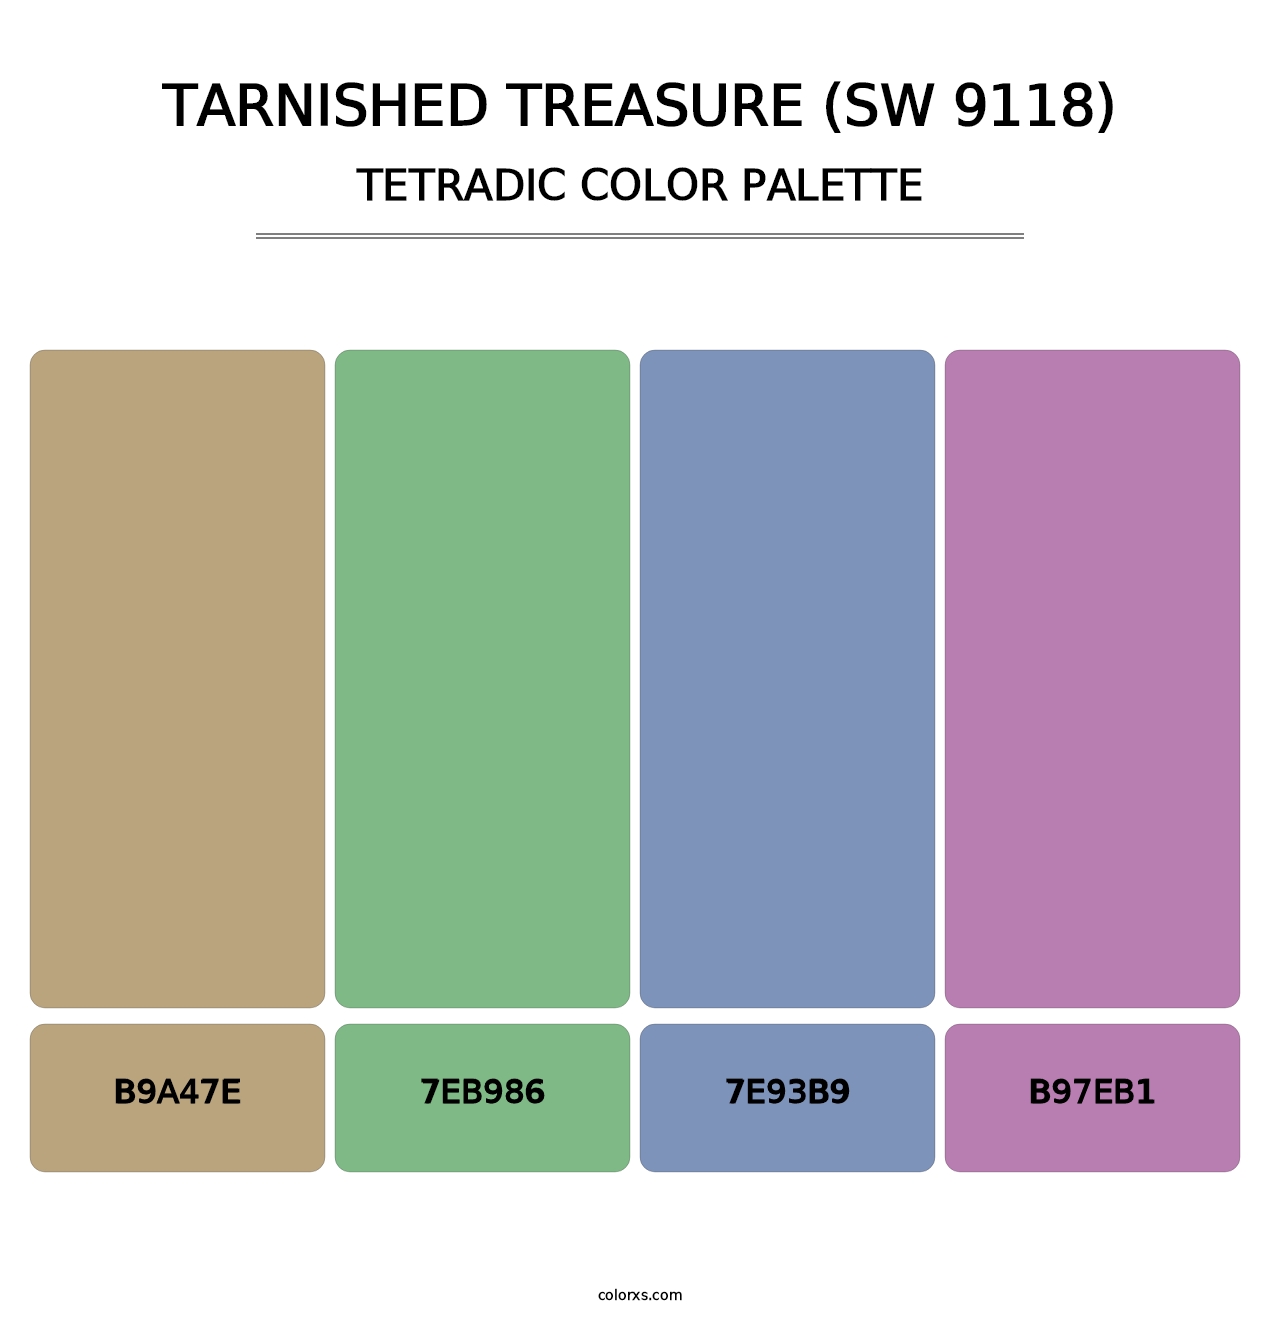 Tarnished Treasure (SW 9118) - Tetradic Color Palette